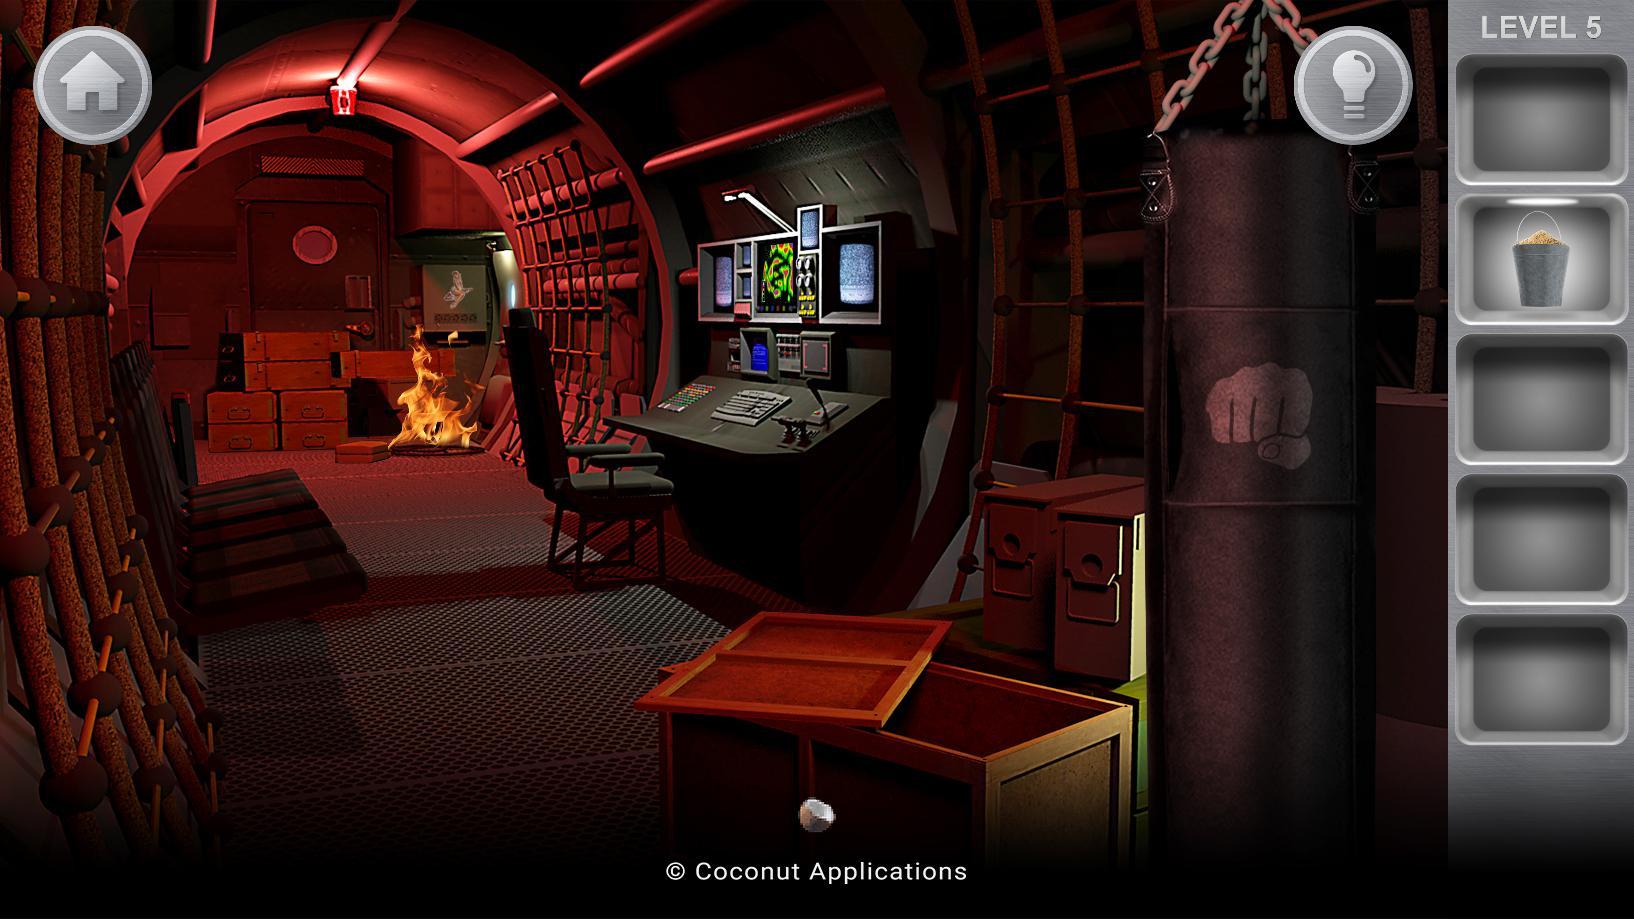 Игра 7 комнат. Quest: Escape Room игра. Escape квест игра для андроид. Игра побег с Голливуда. Прохождение Escape Room Mystery Quests 15.